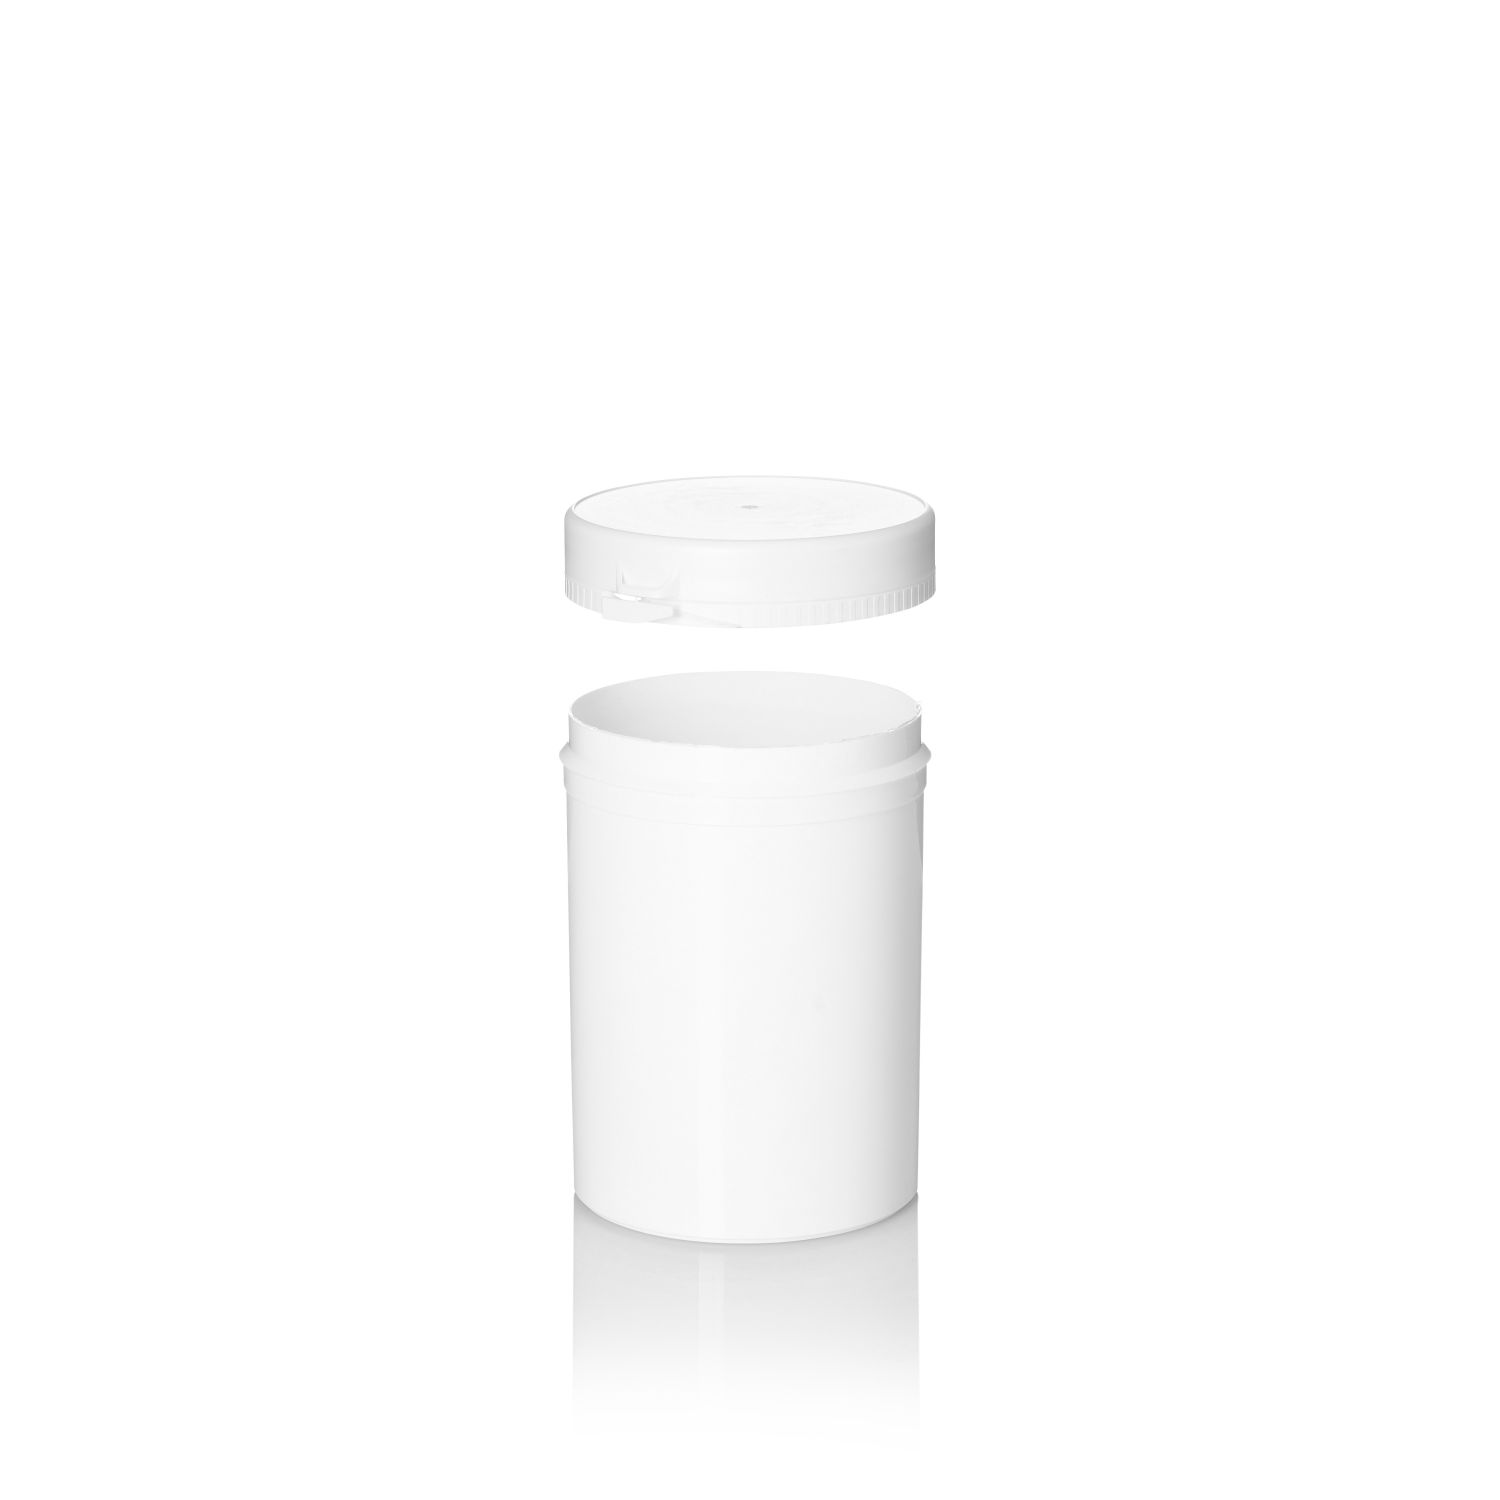 450ml White PP Tamper Evident Snapsecure Jar